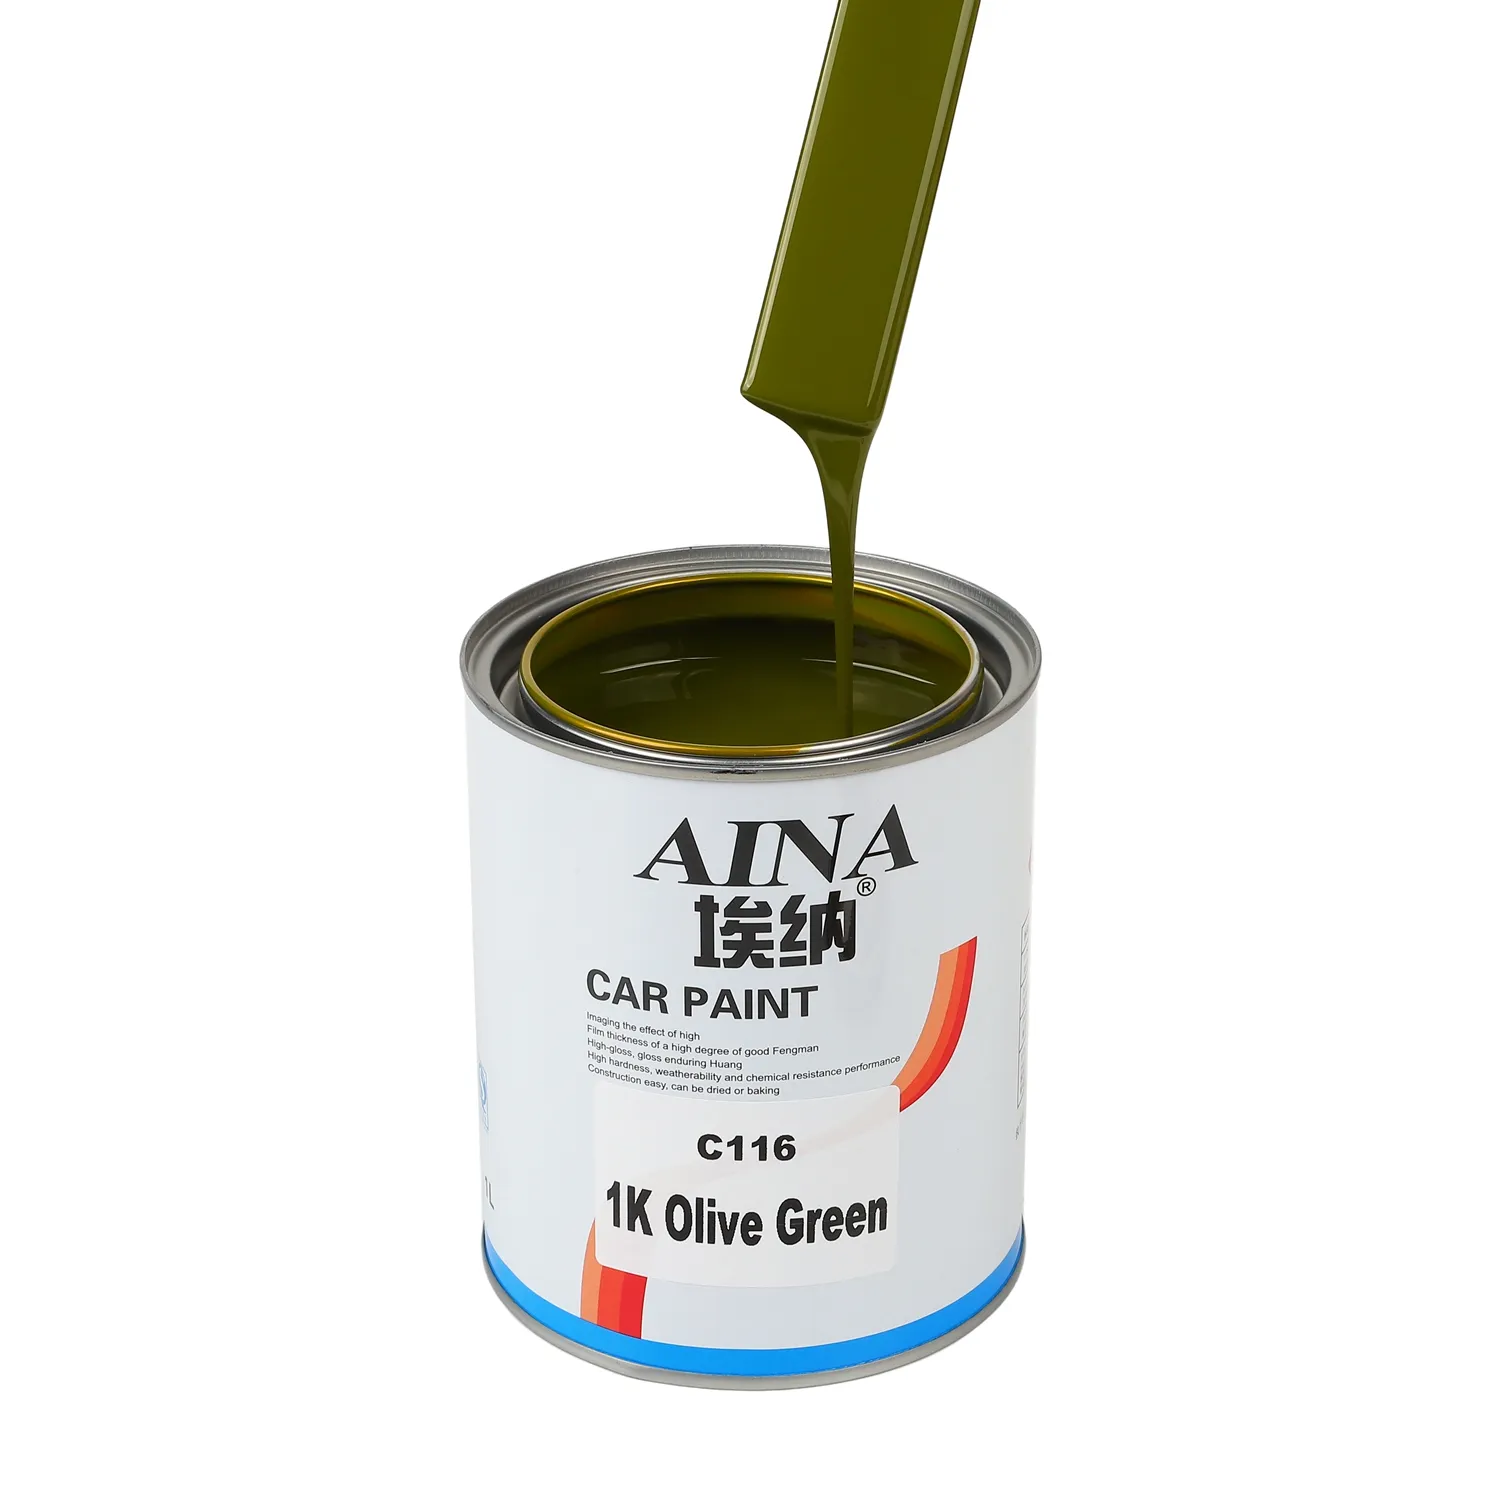 C116 1k Olive Green Acrylic Polyurethane Refinish Paint Excellent Covering Power Selling 1K Car Refinish Paint Automotive Paint